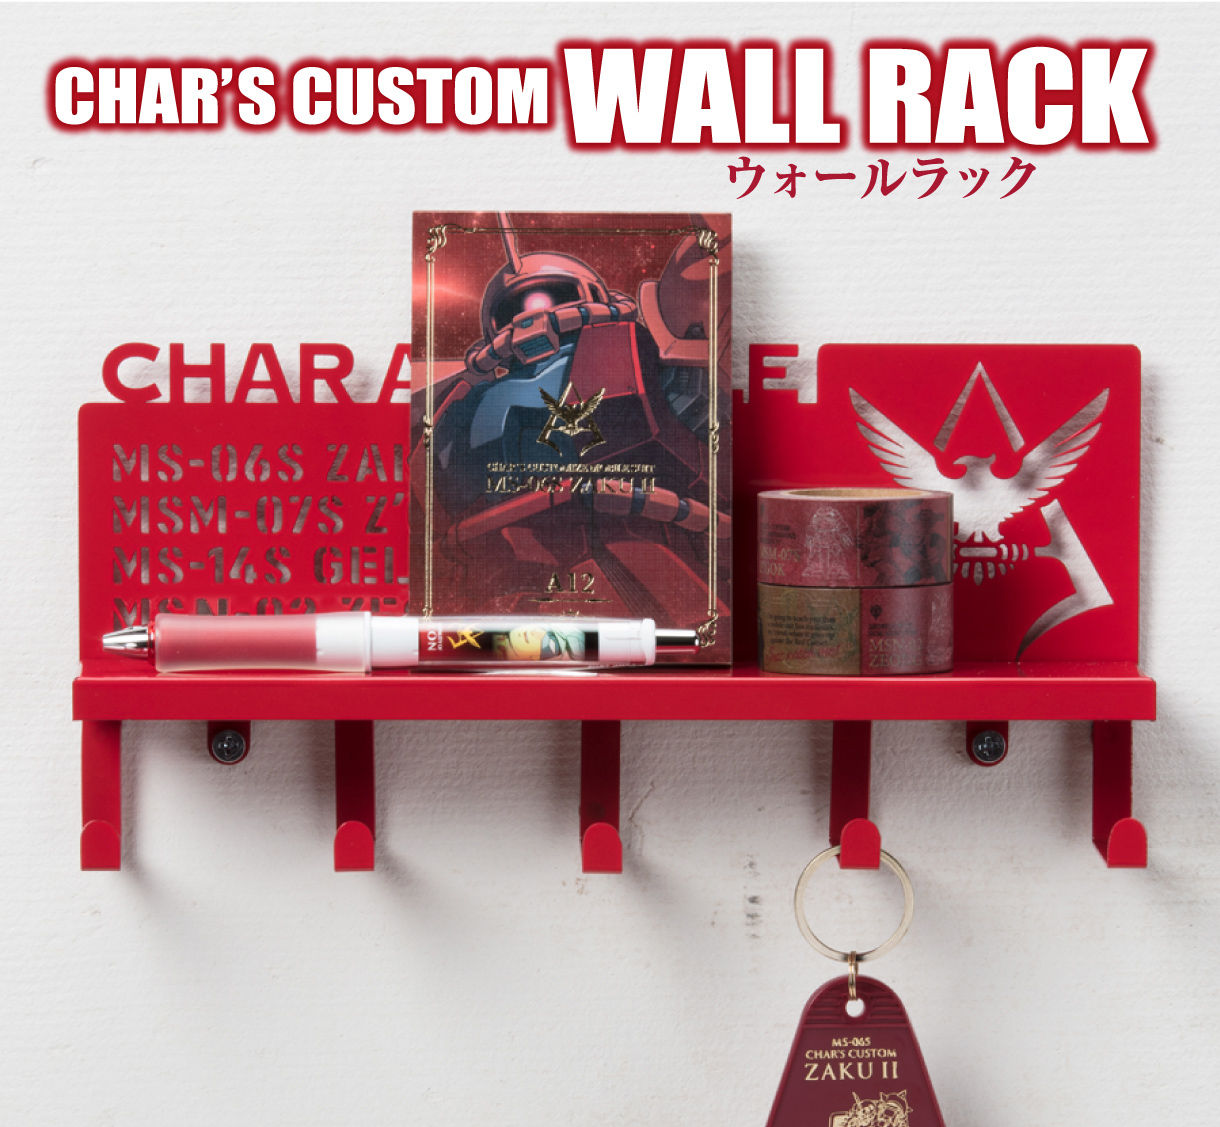 Mobile Suit Gundam: Char Aznable Custom Wall Rack